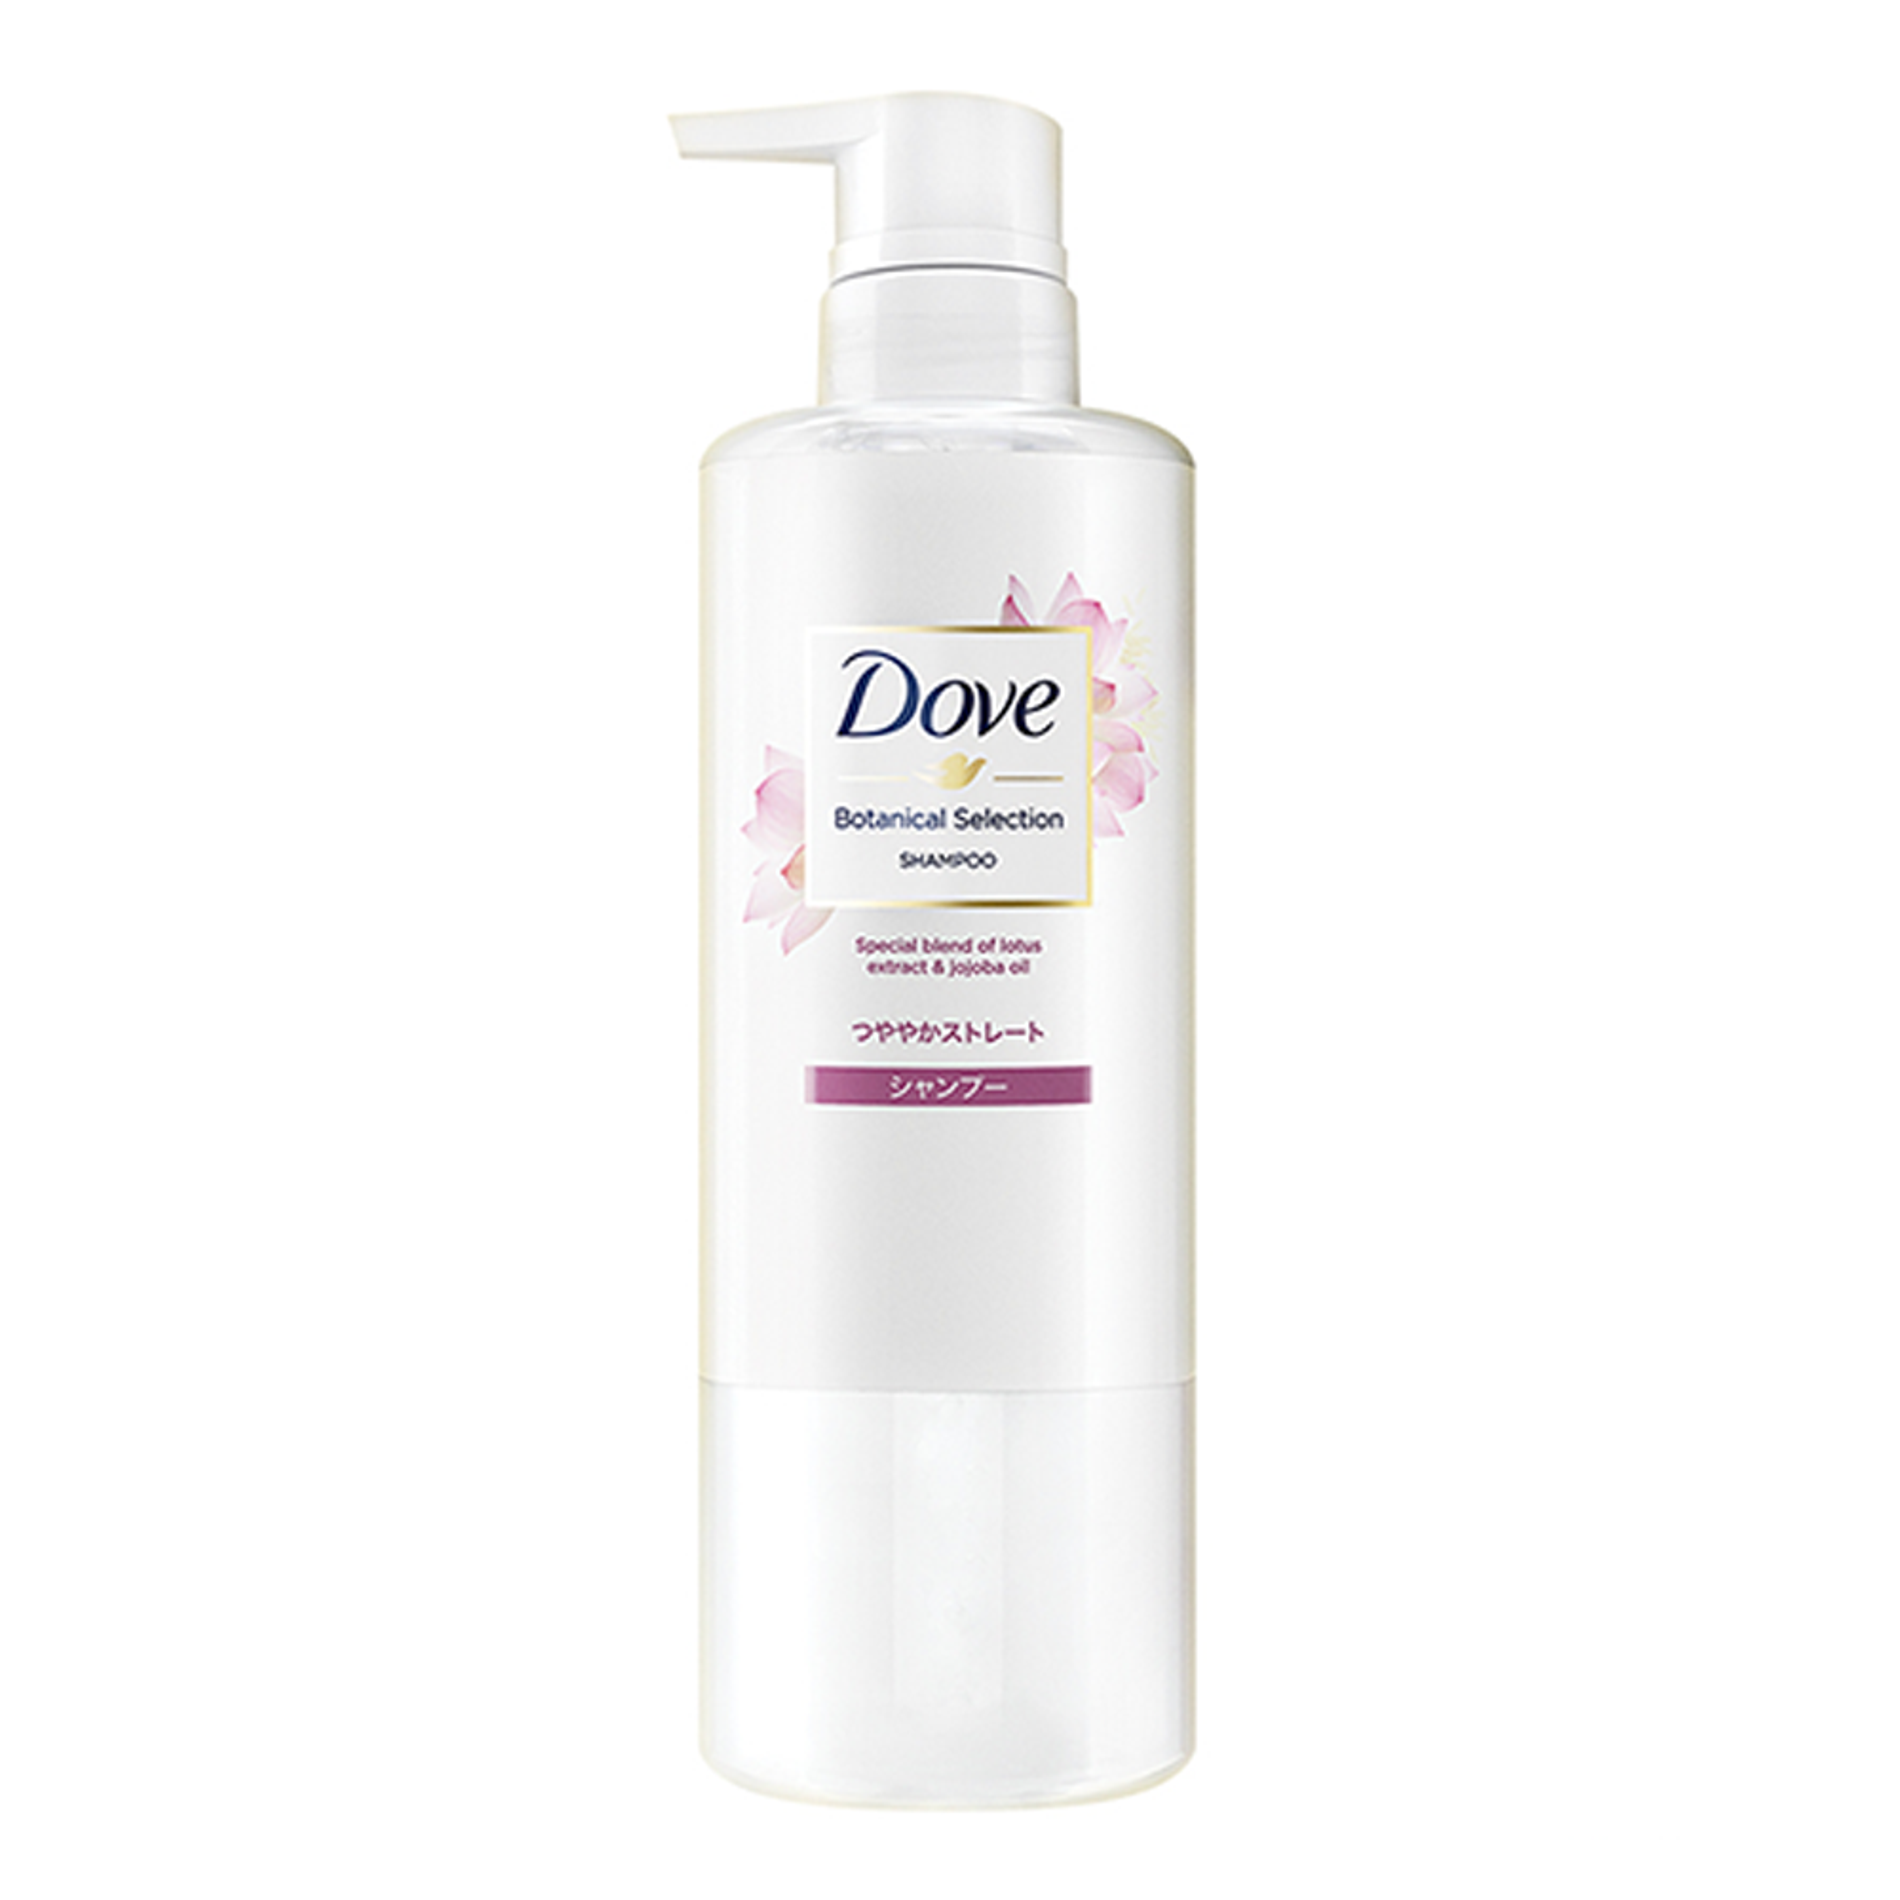 dau-goi-giup-toc-bong-muot-tu-hoa-sen-dau-jojoba-dove-botanical-selection-shampoo-500g-2